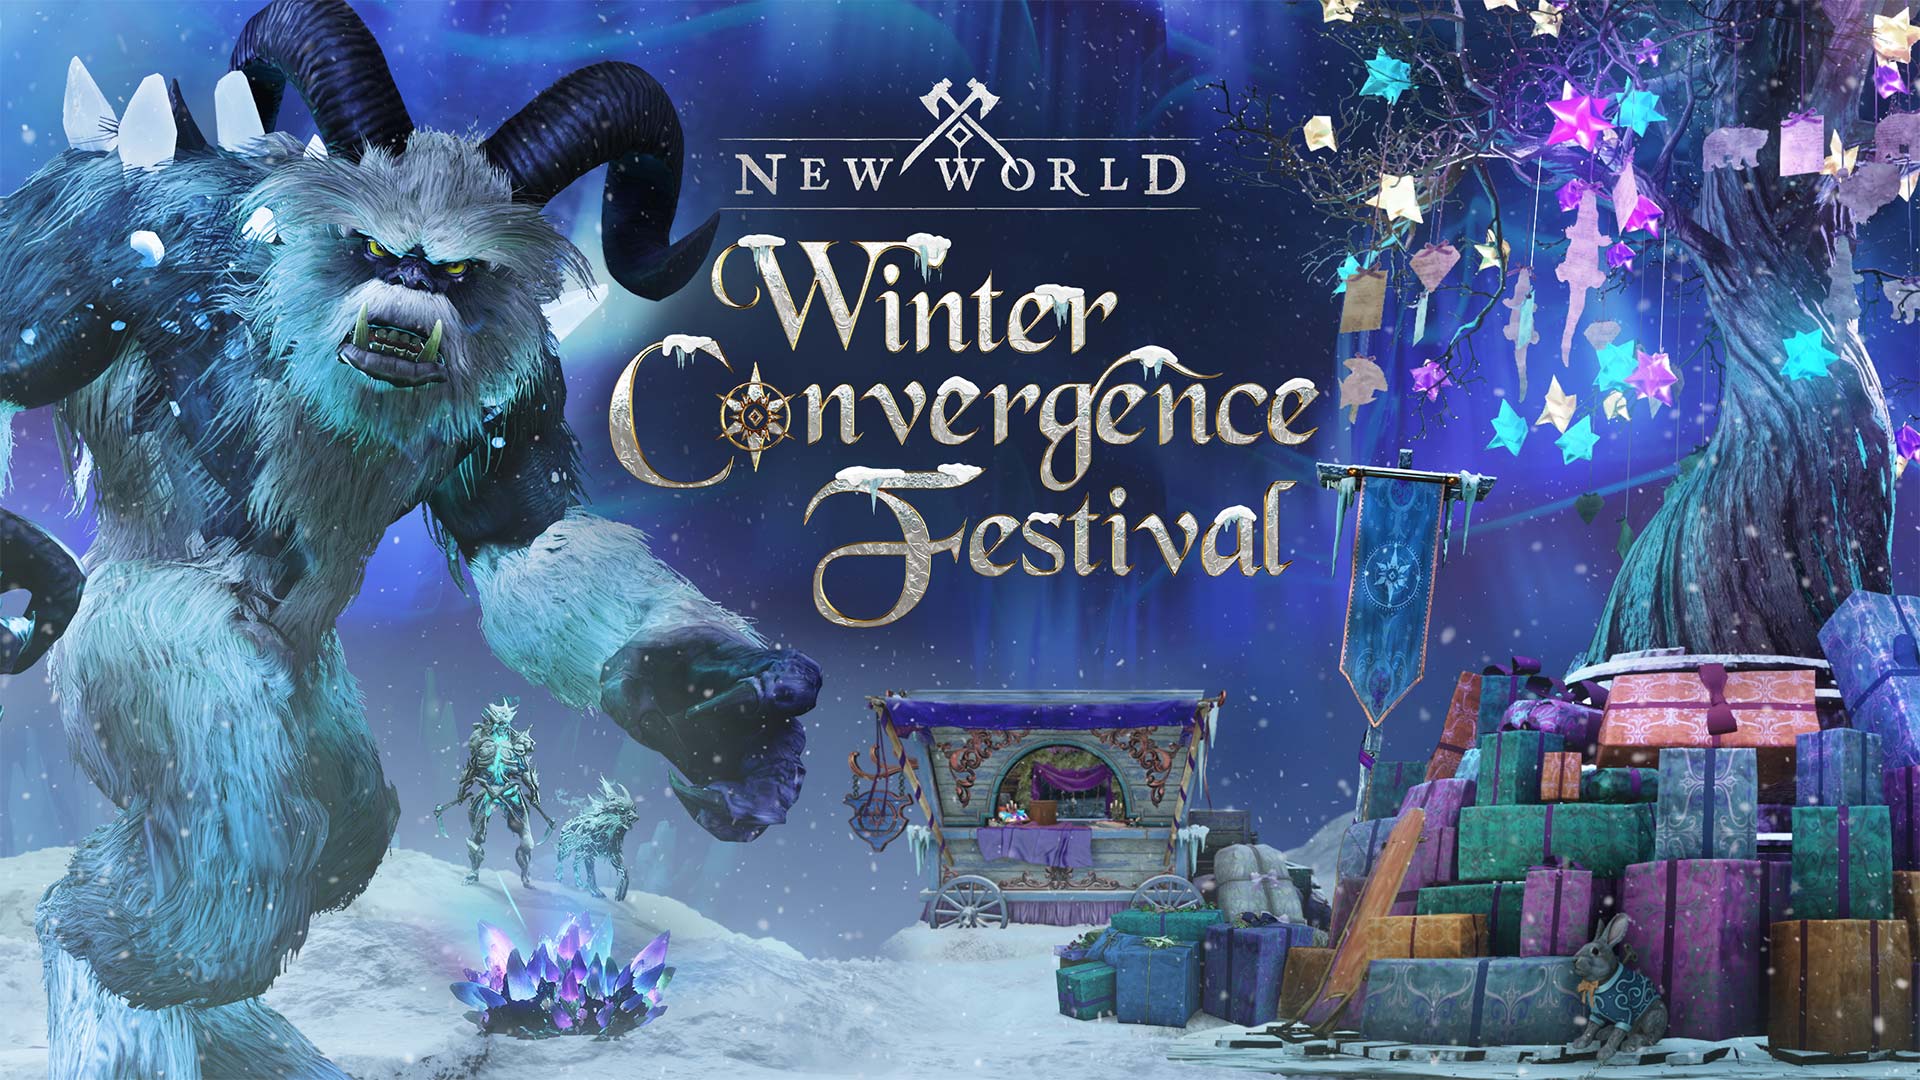 New World Winter Convergence Festival